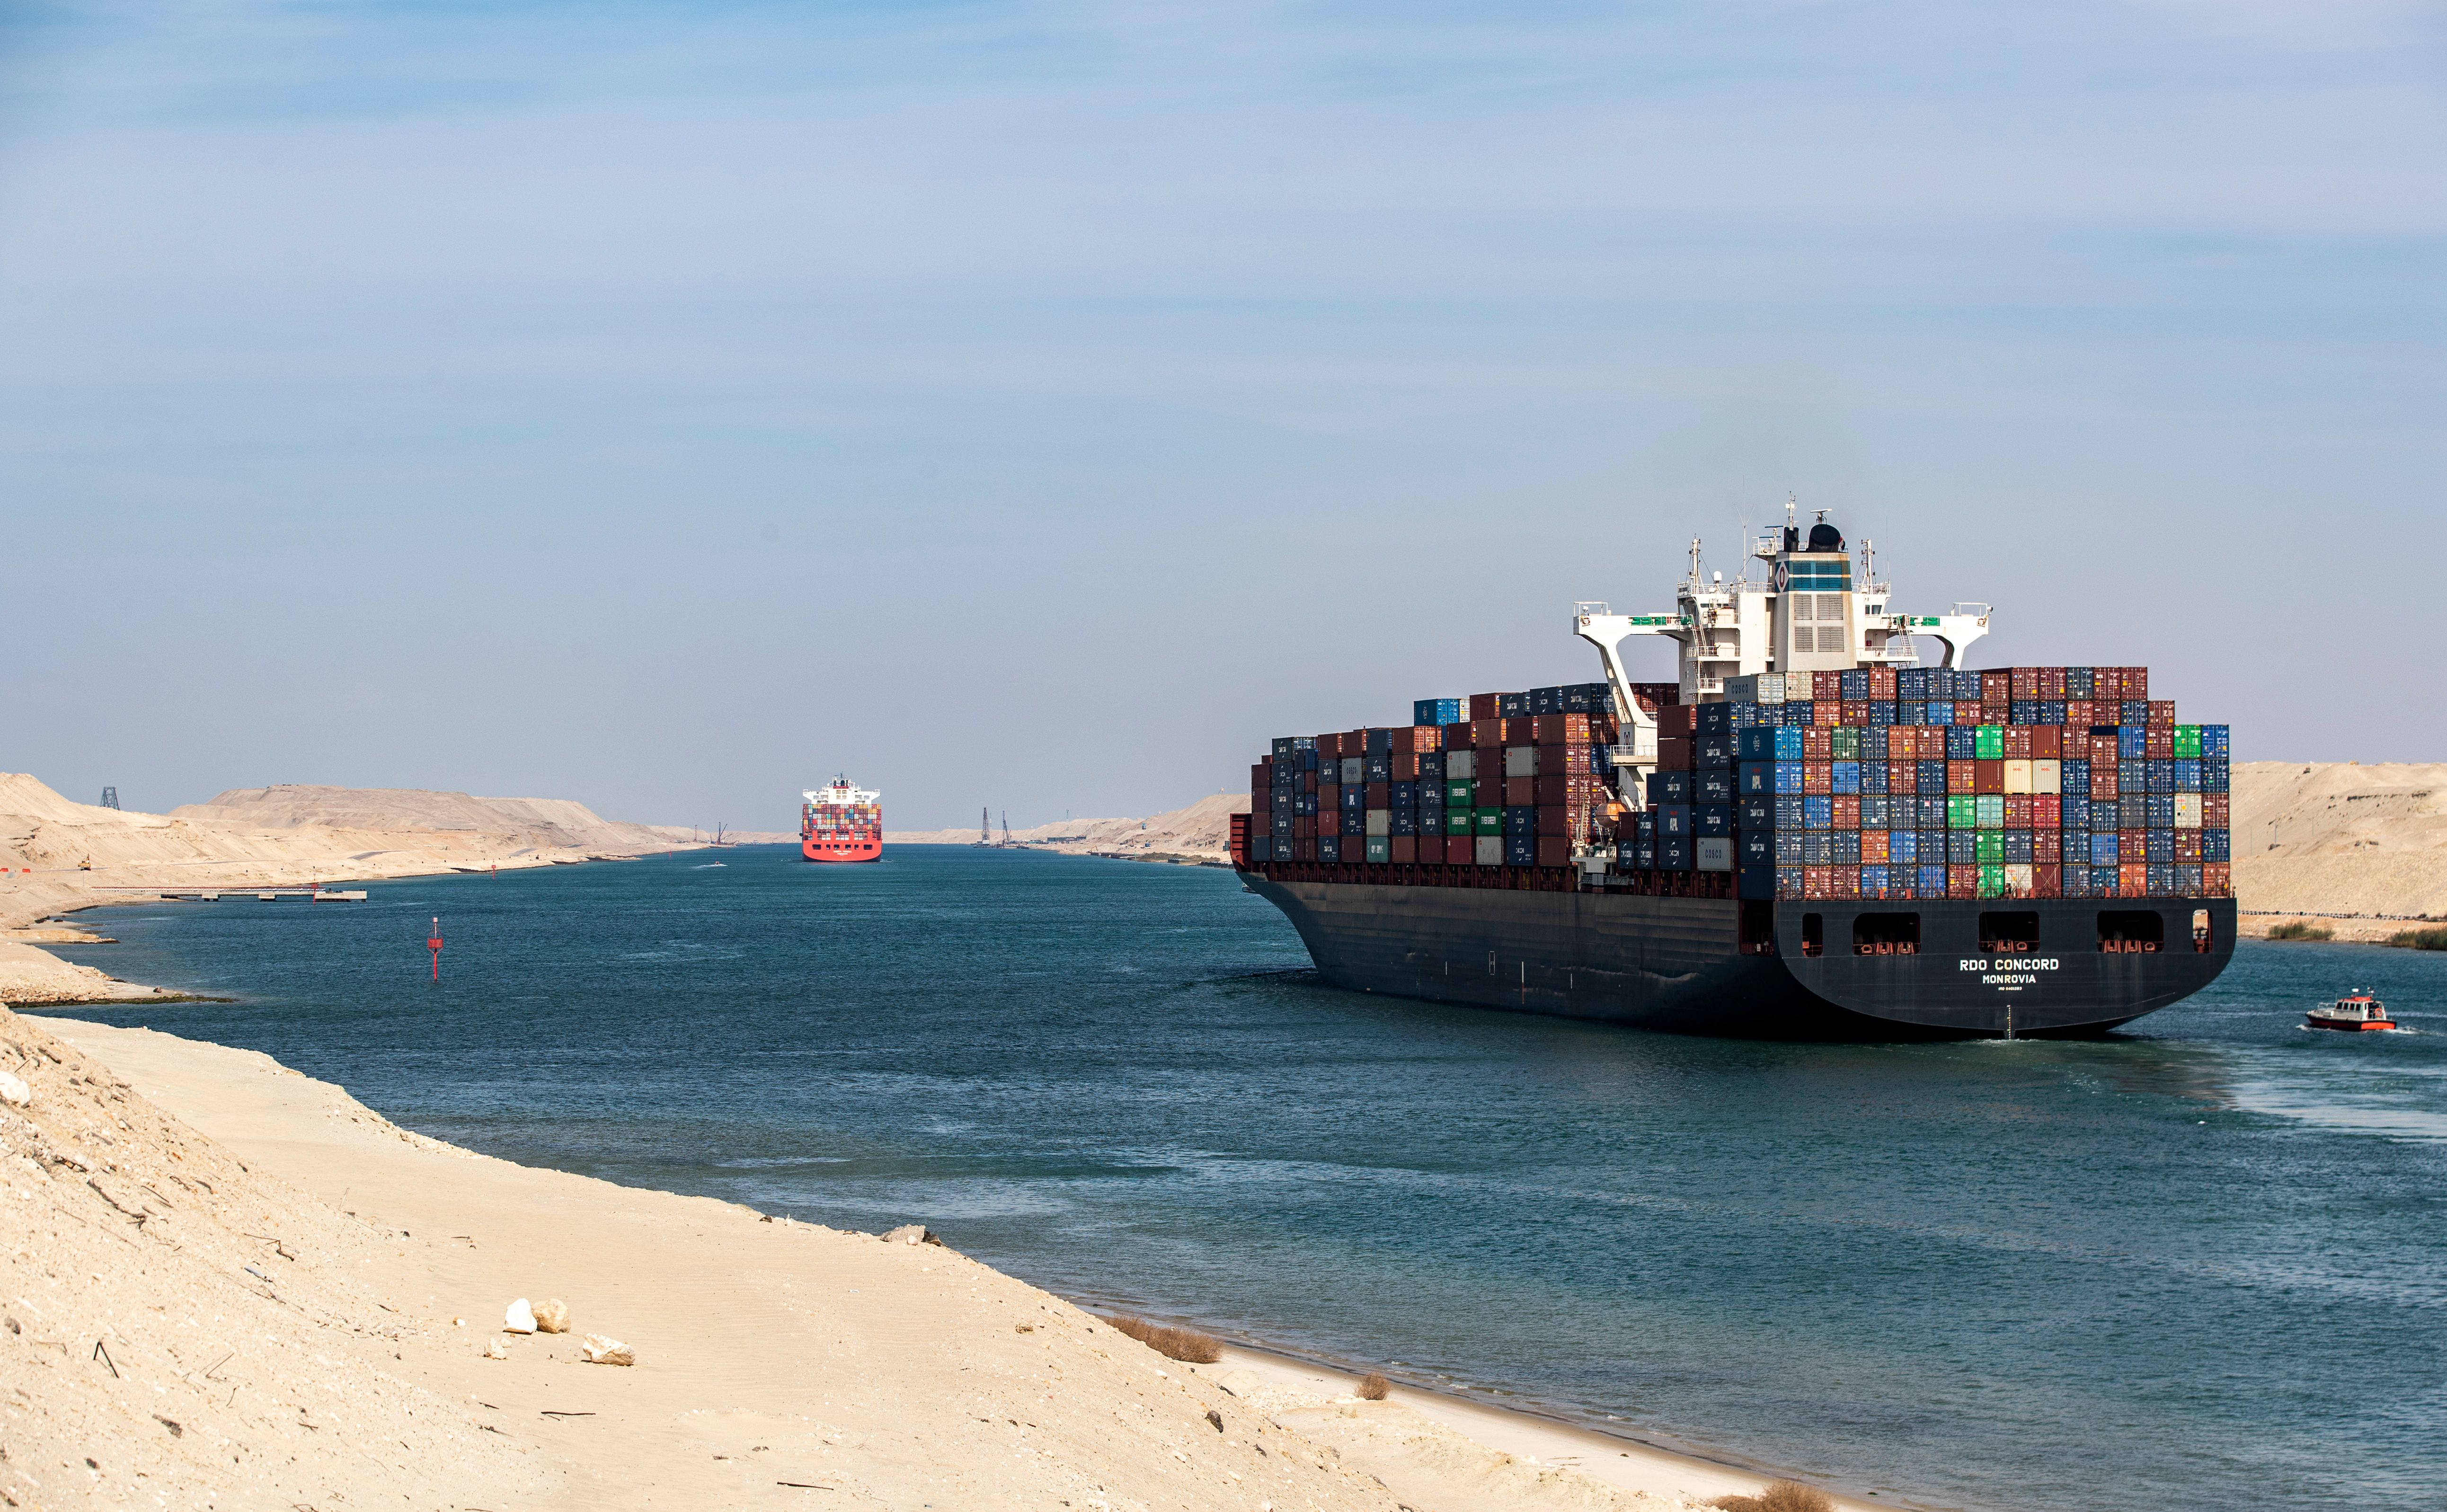 A container ship sailing through Egypt's Suez Canal on 17 November 2019